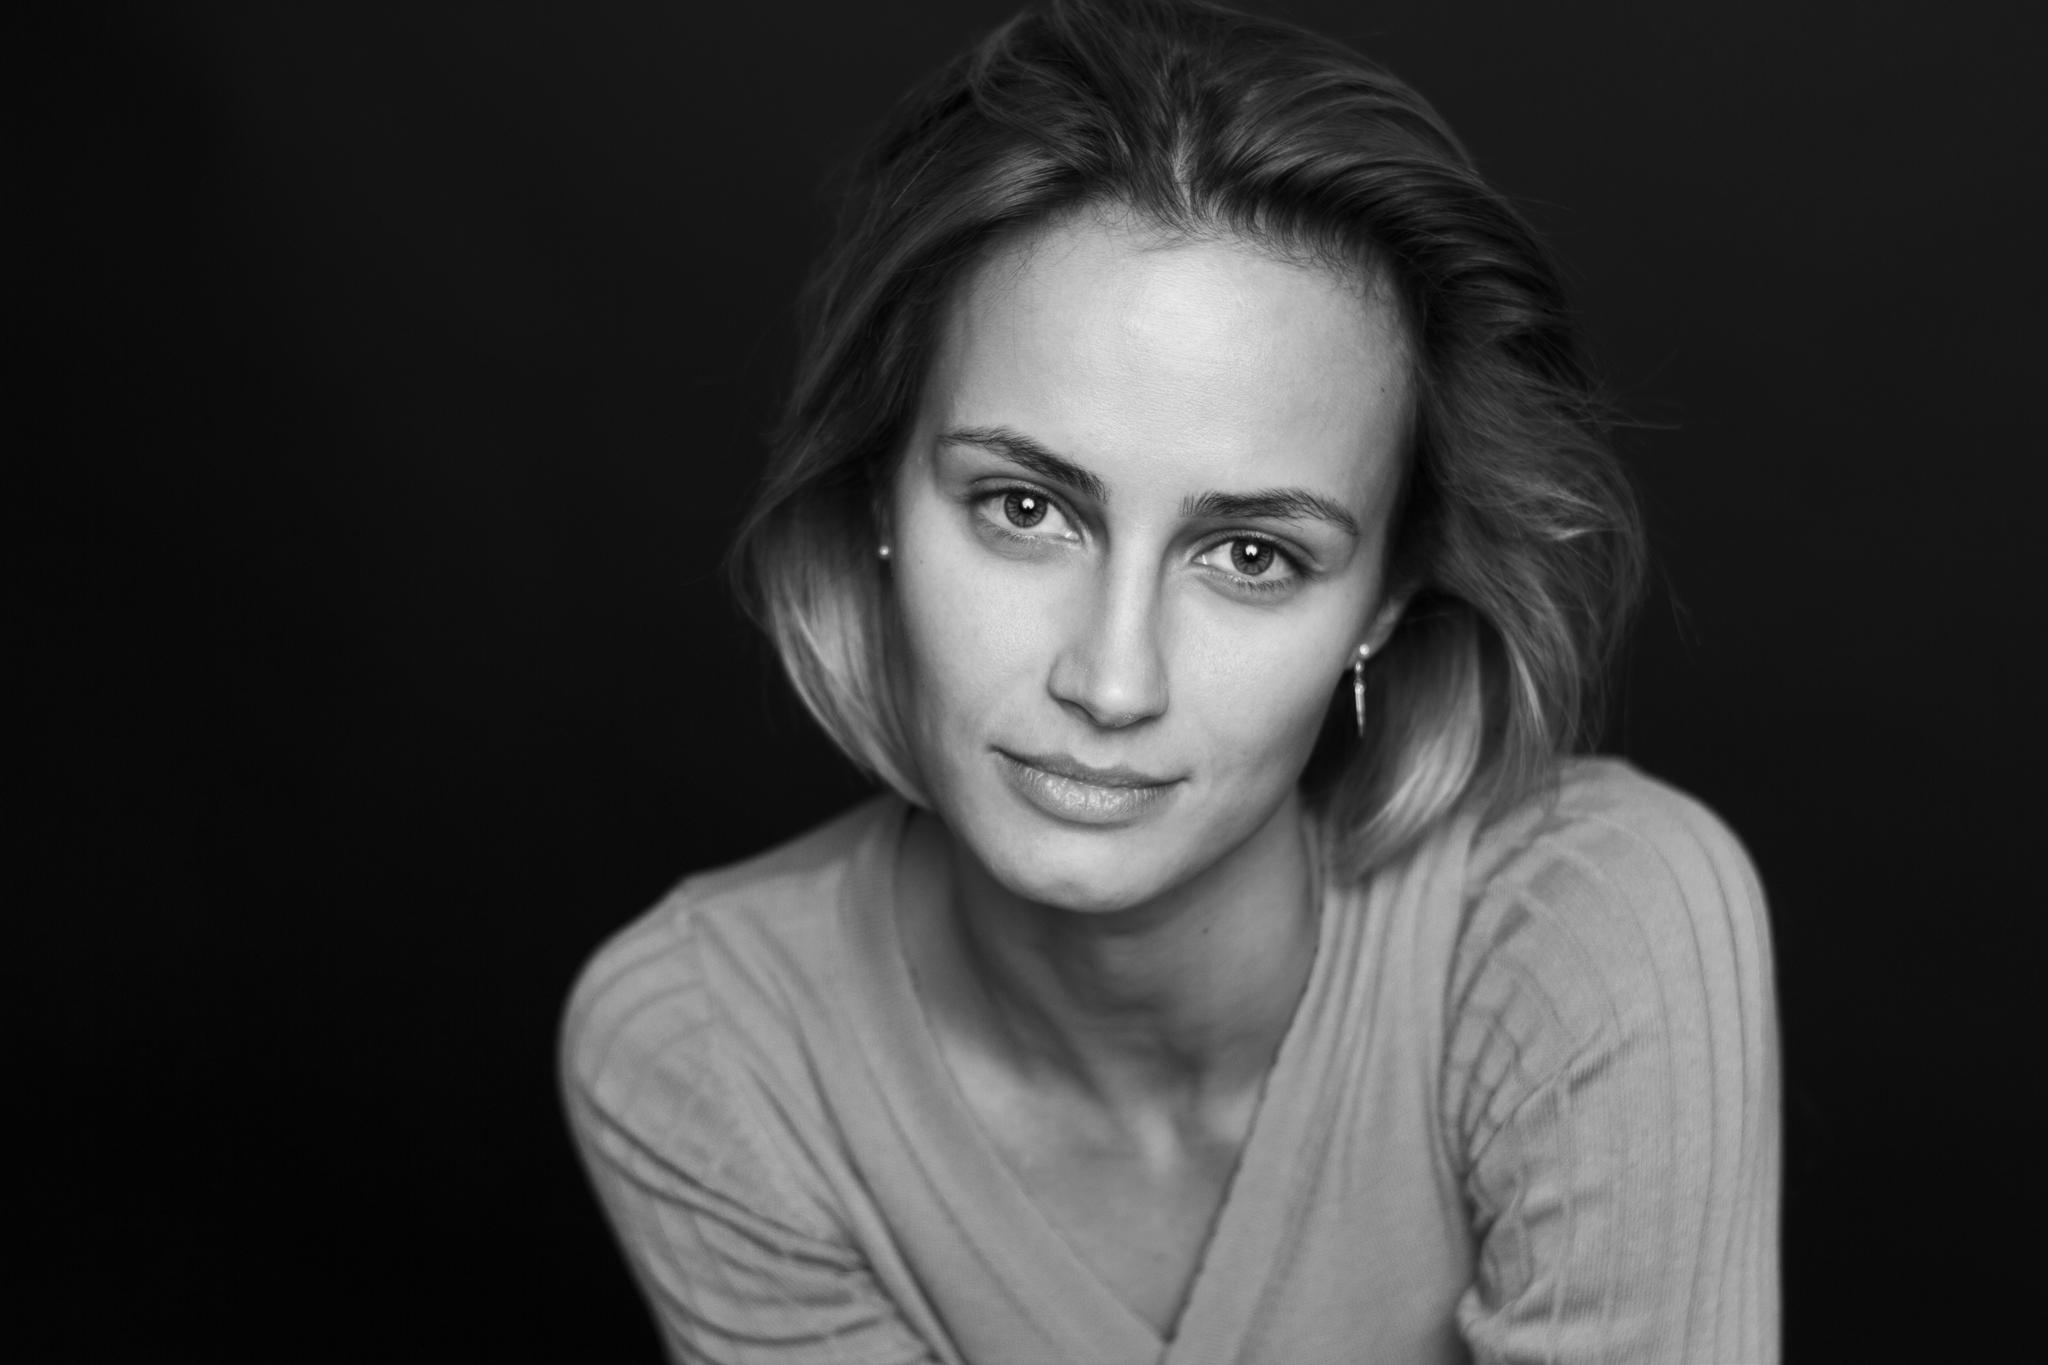 Алена Коломина, 36, Москва. Актер театра и кино. Официальный сайт | Kinolift